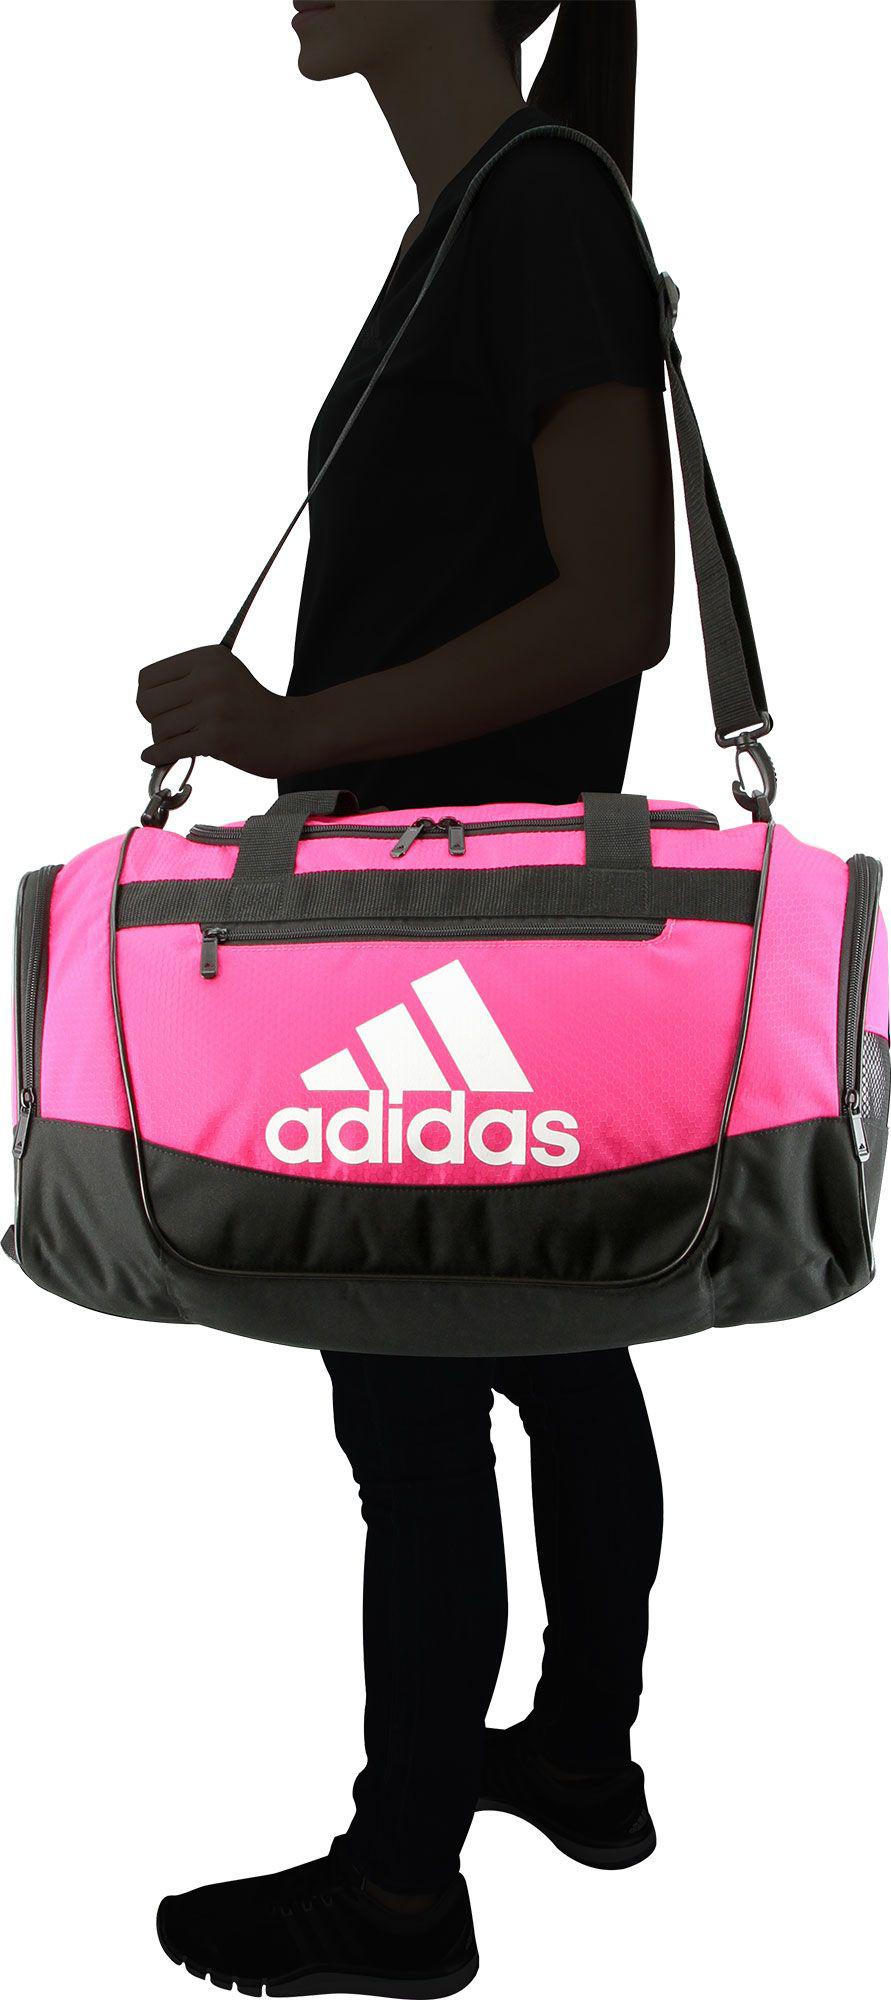 adidas Synthetic Defender Iii Medium Duffle Bag in Pink - Lyst